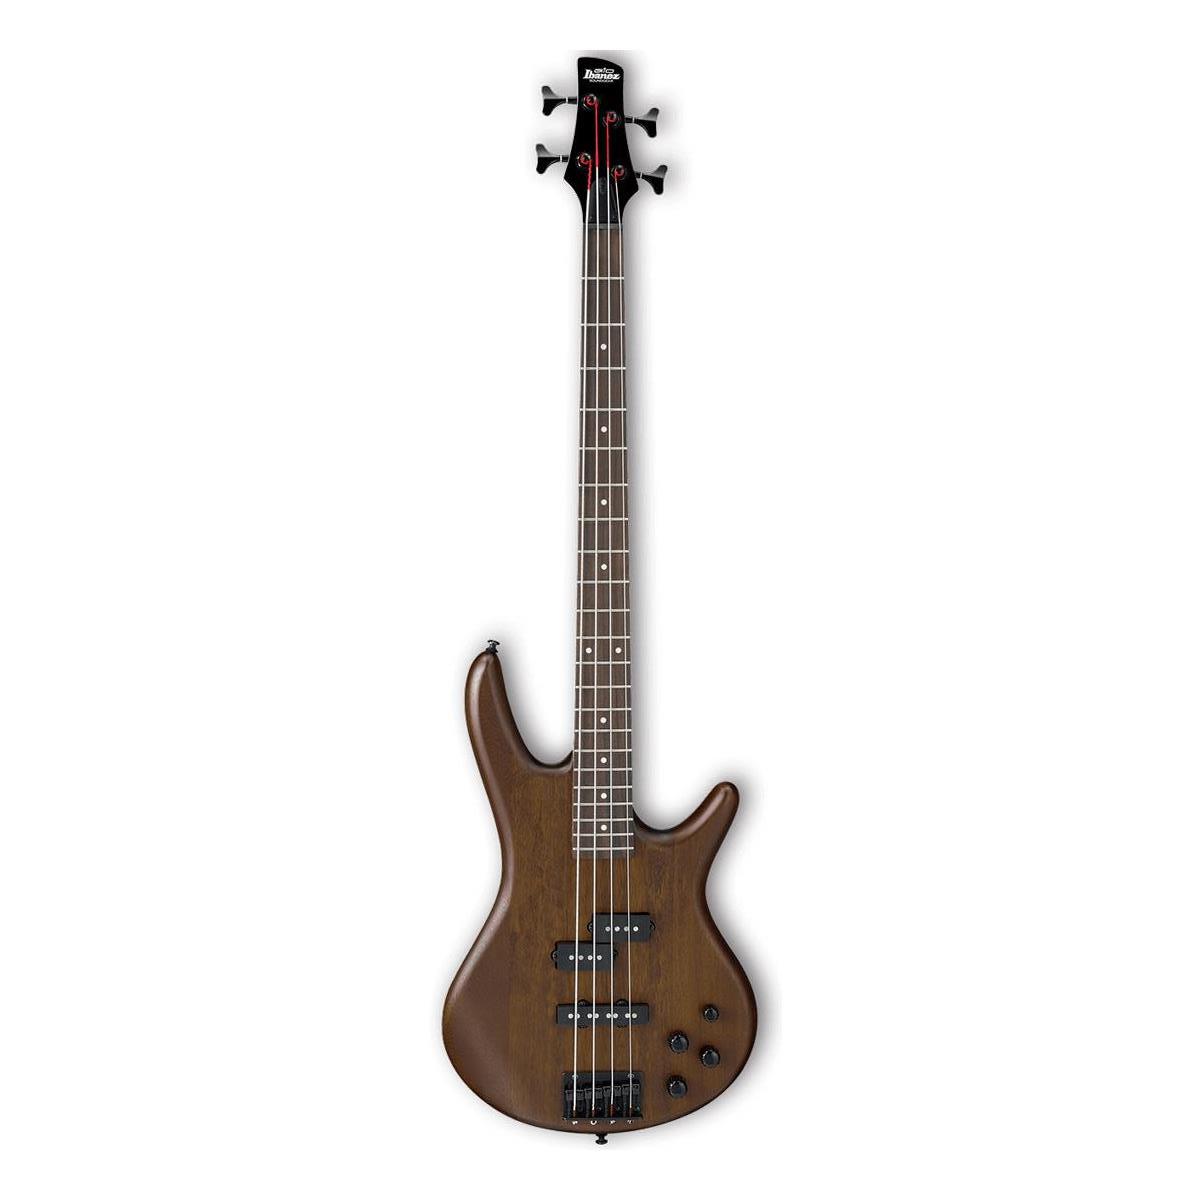 Ibanez SR Gio GSR200B Electric Bass Guitar (Jatoba Fretboard, Walnut Flat) $149 + free s/h